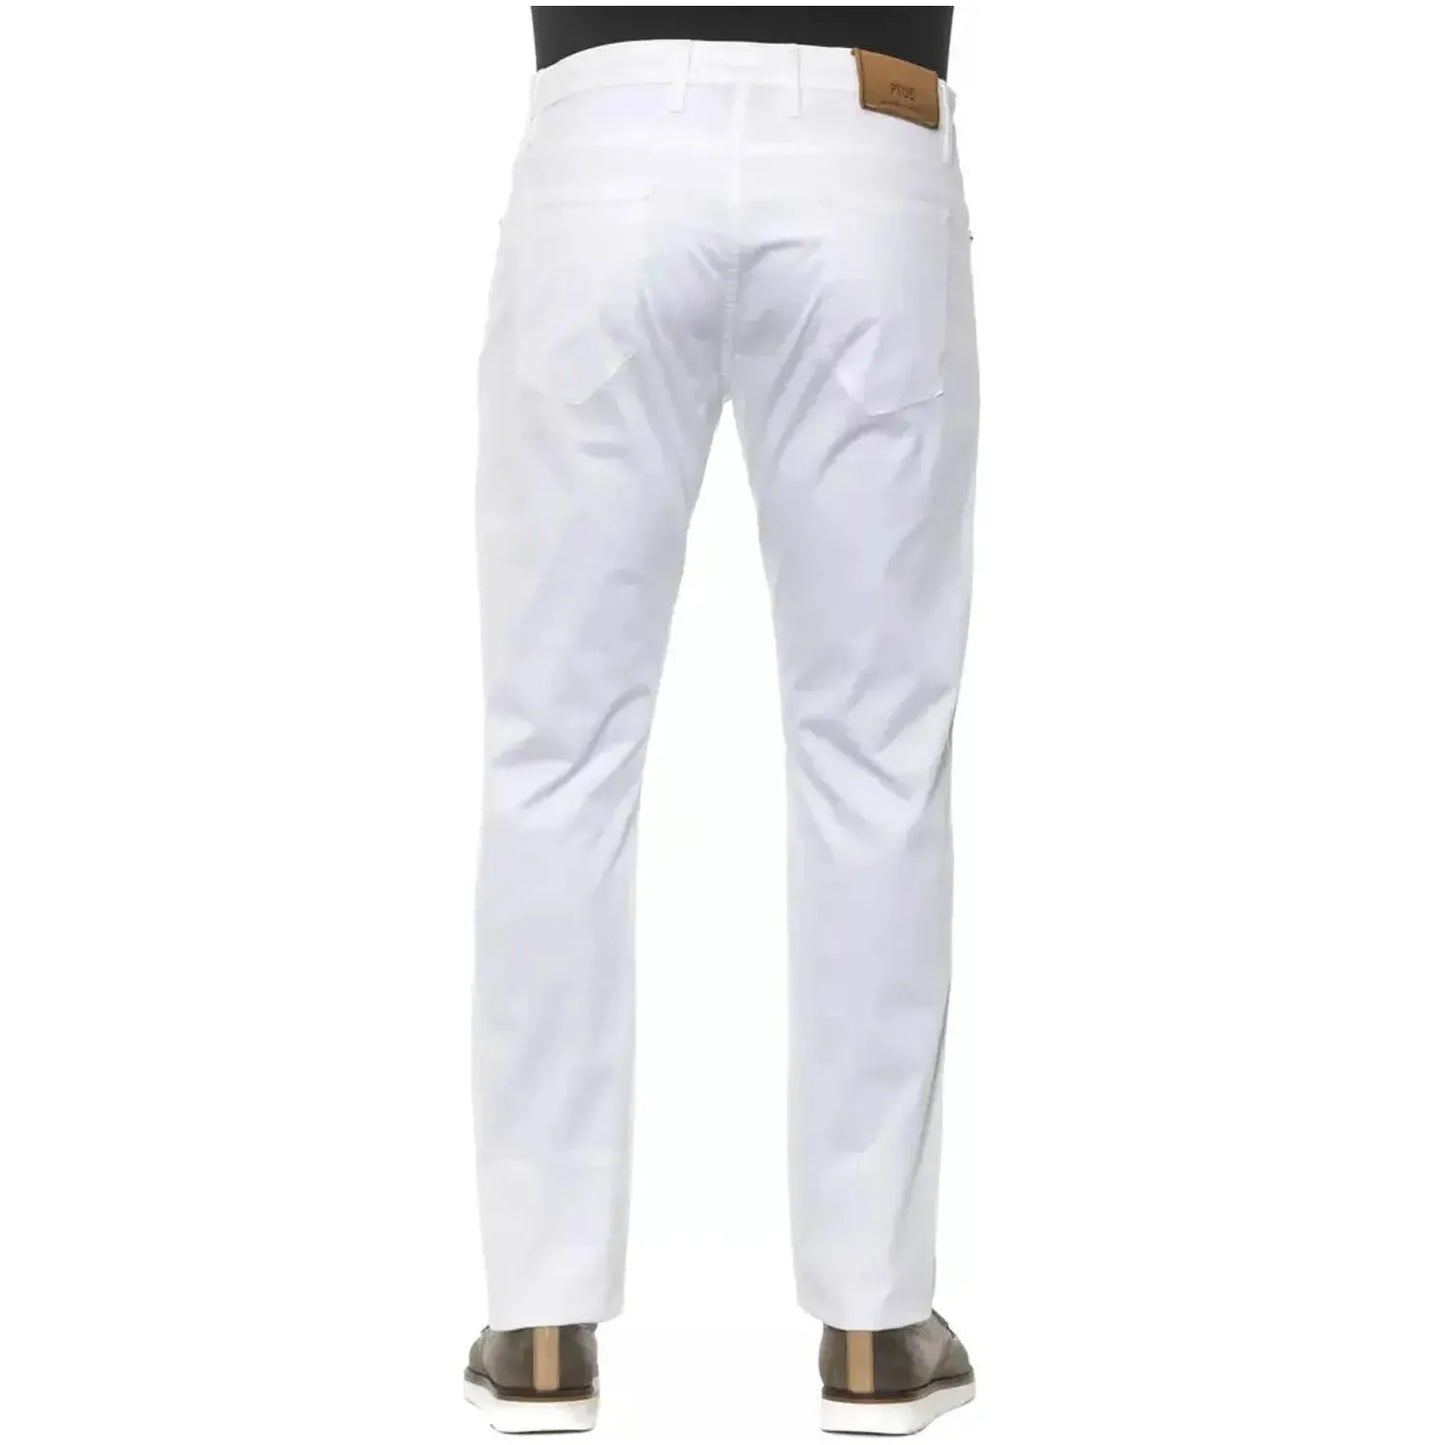 PT Torino Exquisite White Slim Trousers for Men white-cotton-jeans-pant-13